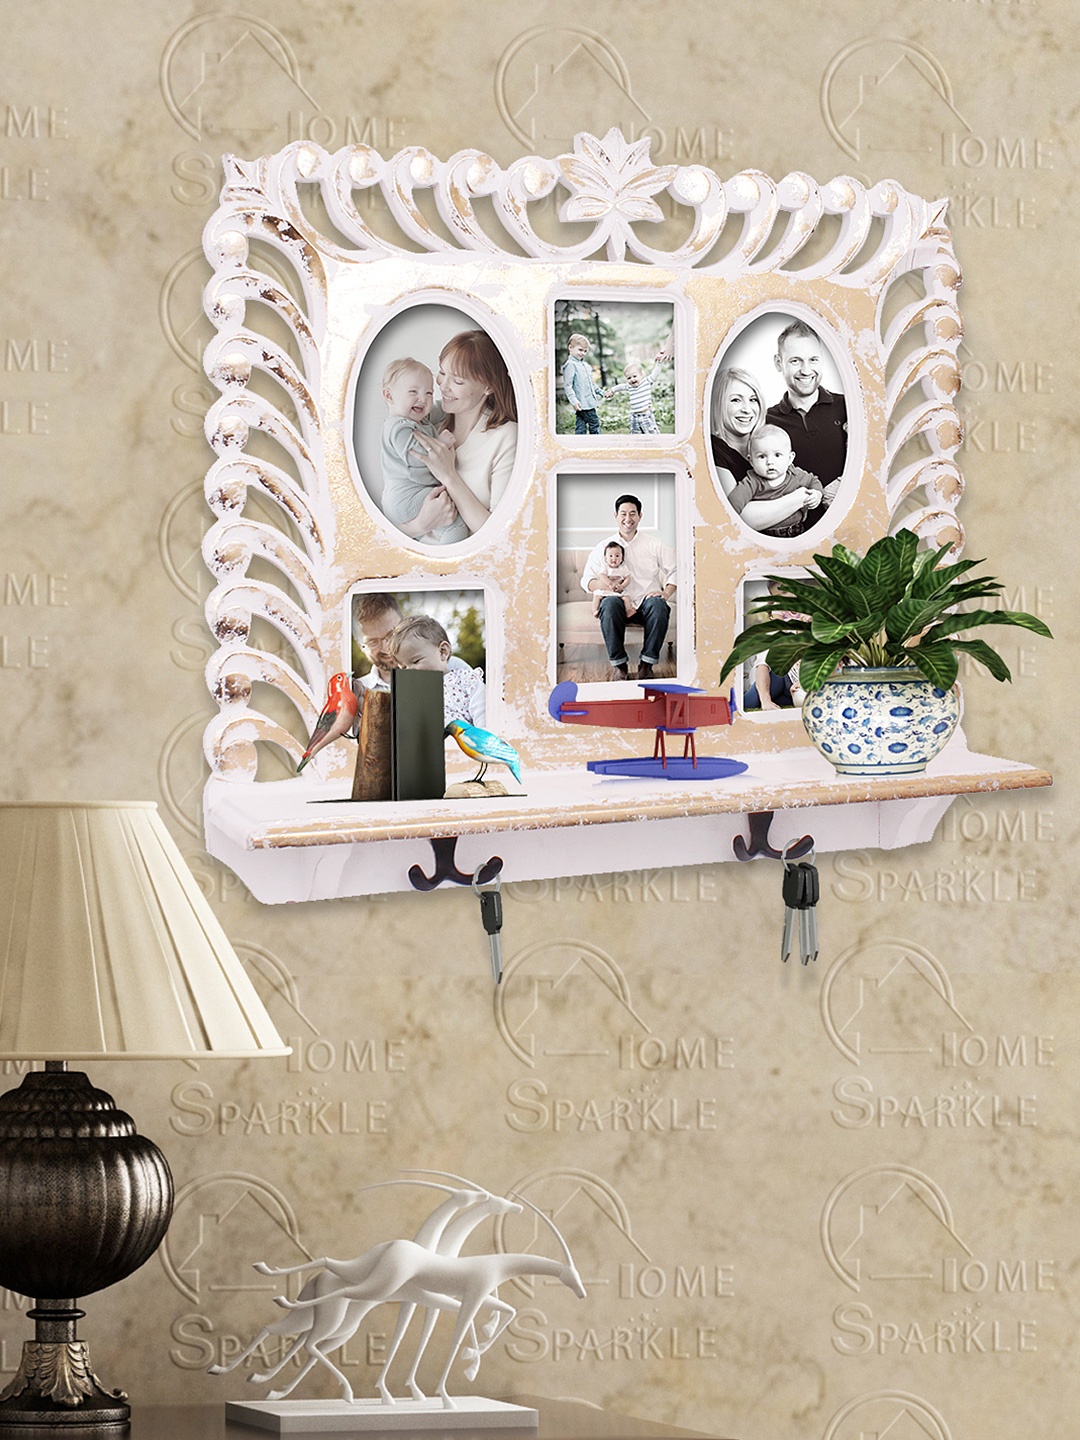 

Home Sparkle White & Gold-Toned Photo Frame Wall Shelf with Hooks